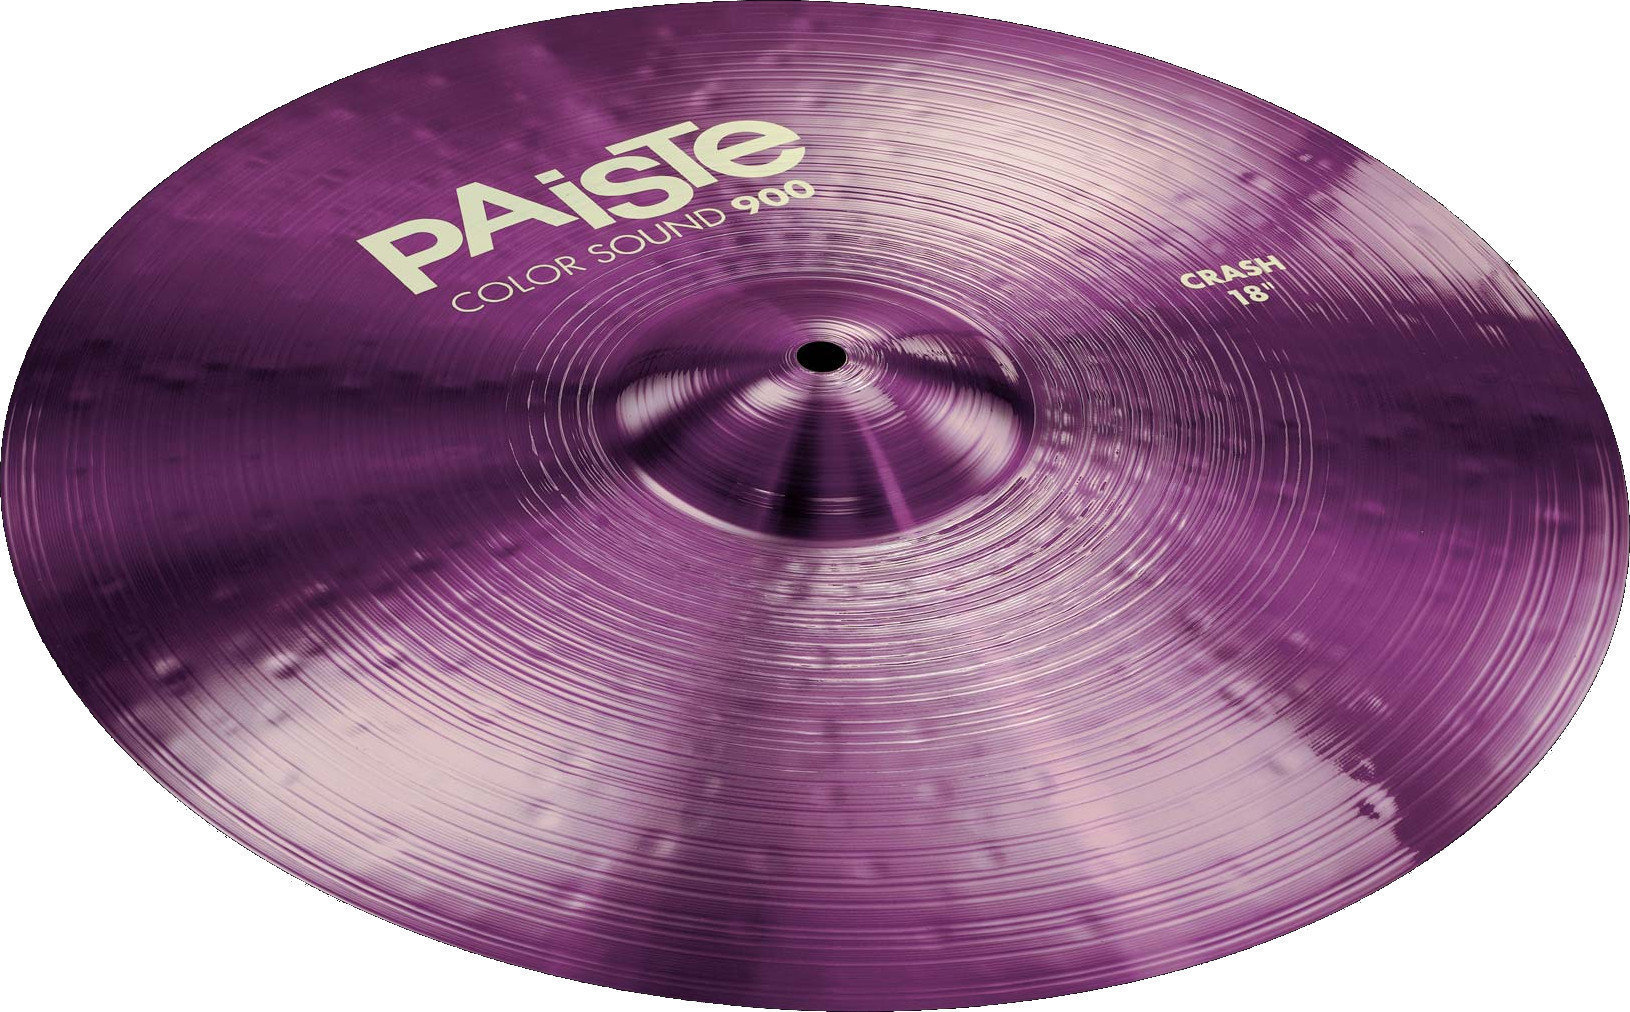 Crash Cymbal Paiste Color Sound 900 Crash Cymbal 20" Violett